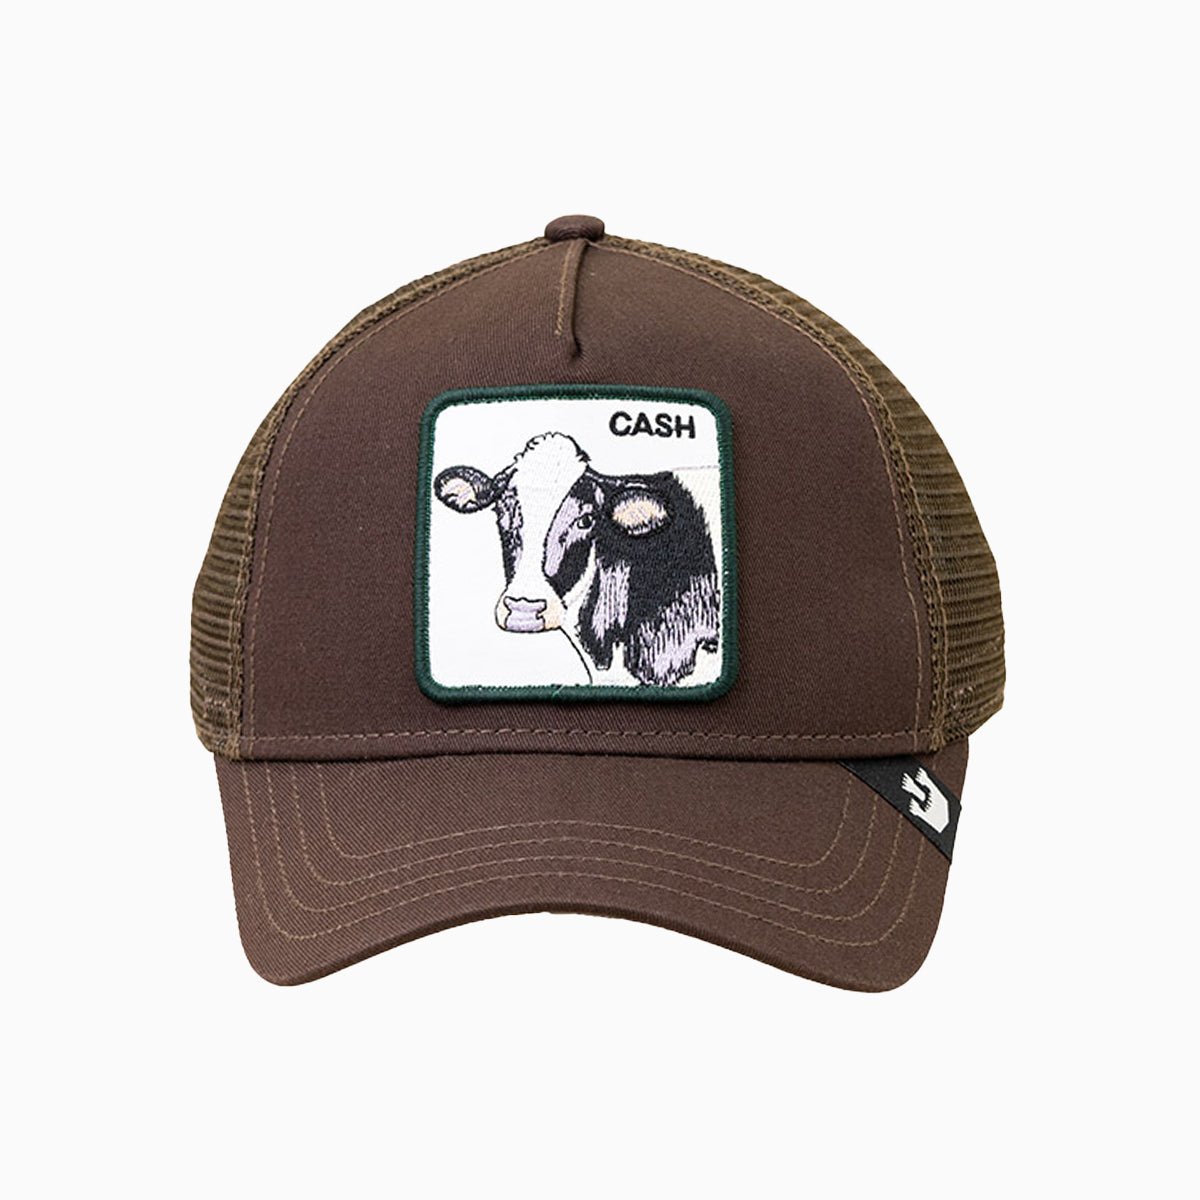 The Cash Cow Trucker Hat